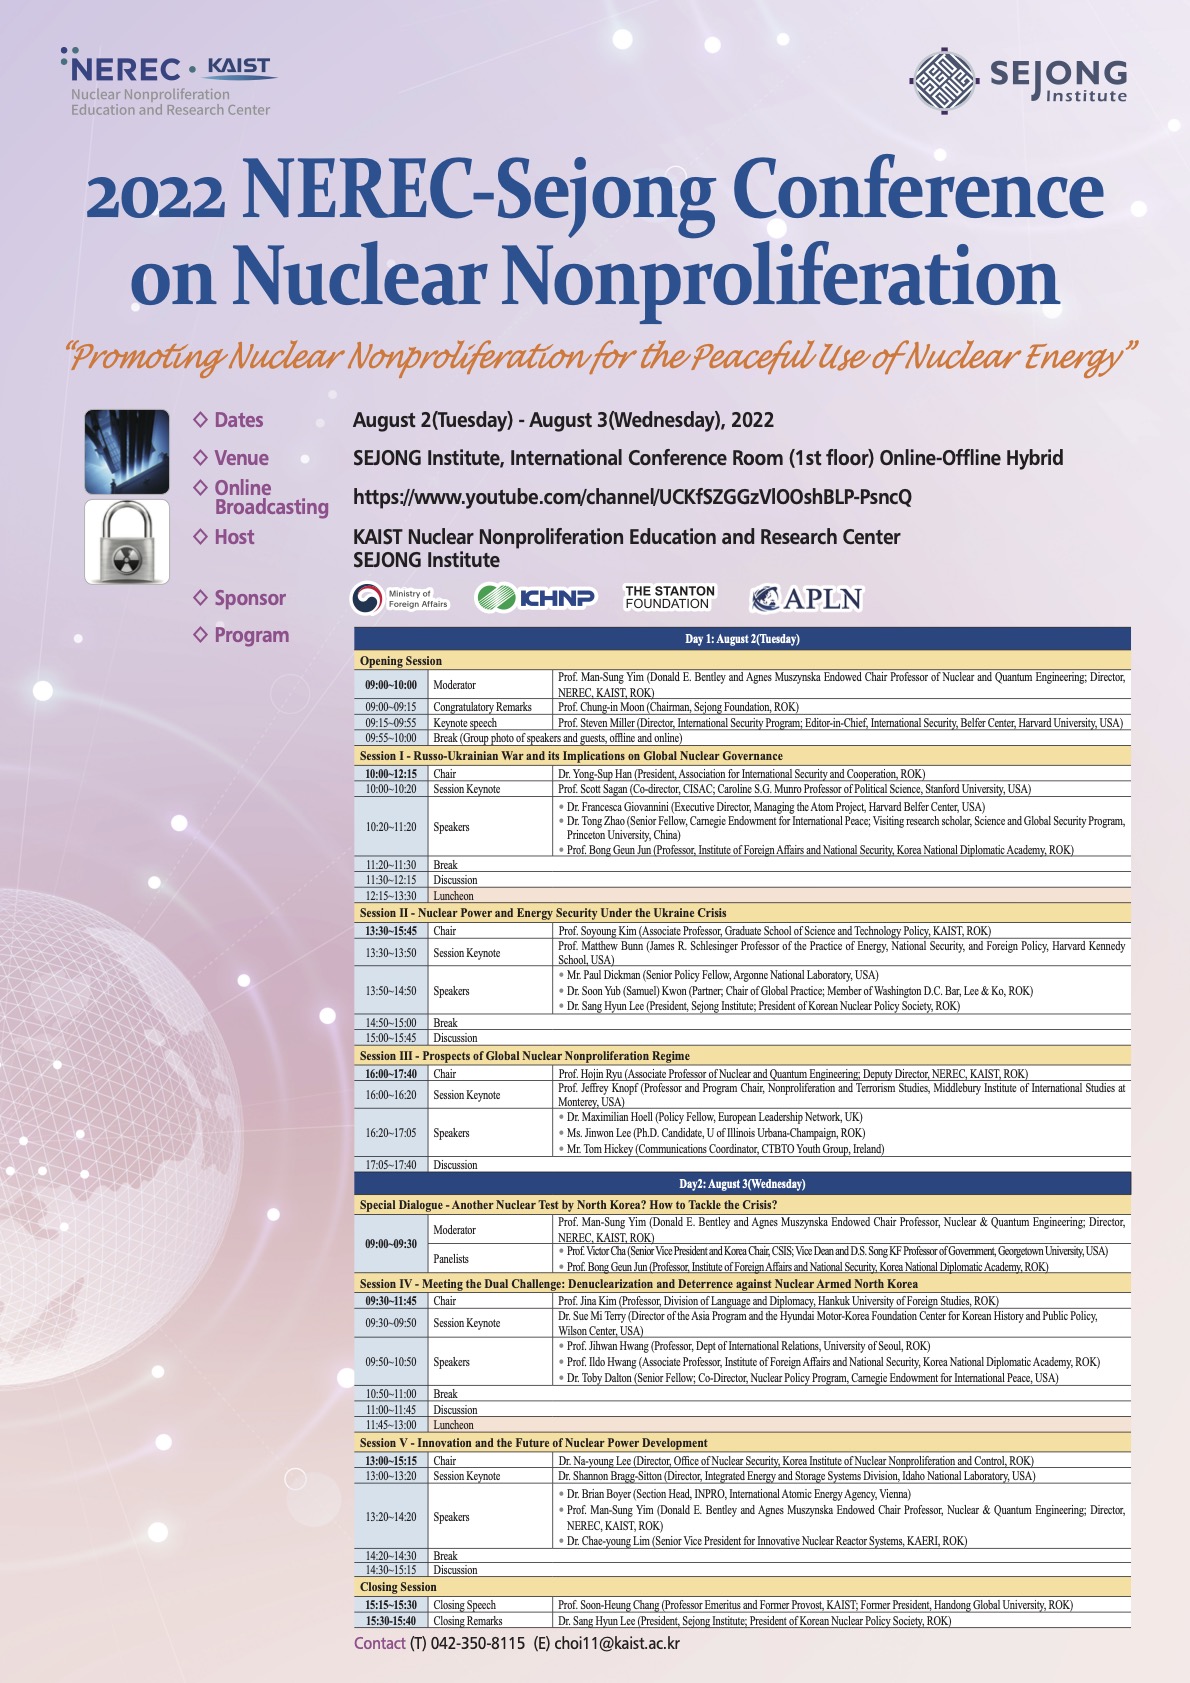 2022 NEREC-Sejong Conference on Nuclear Nonproliferation